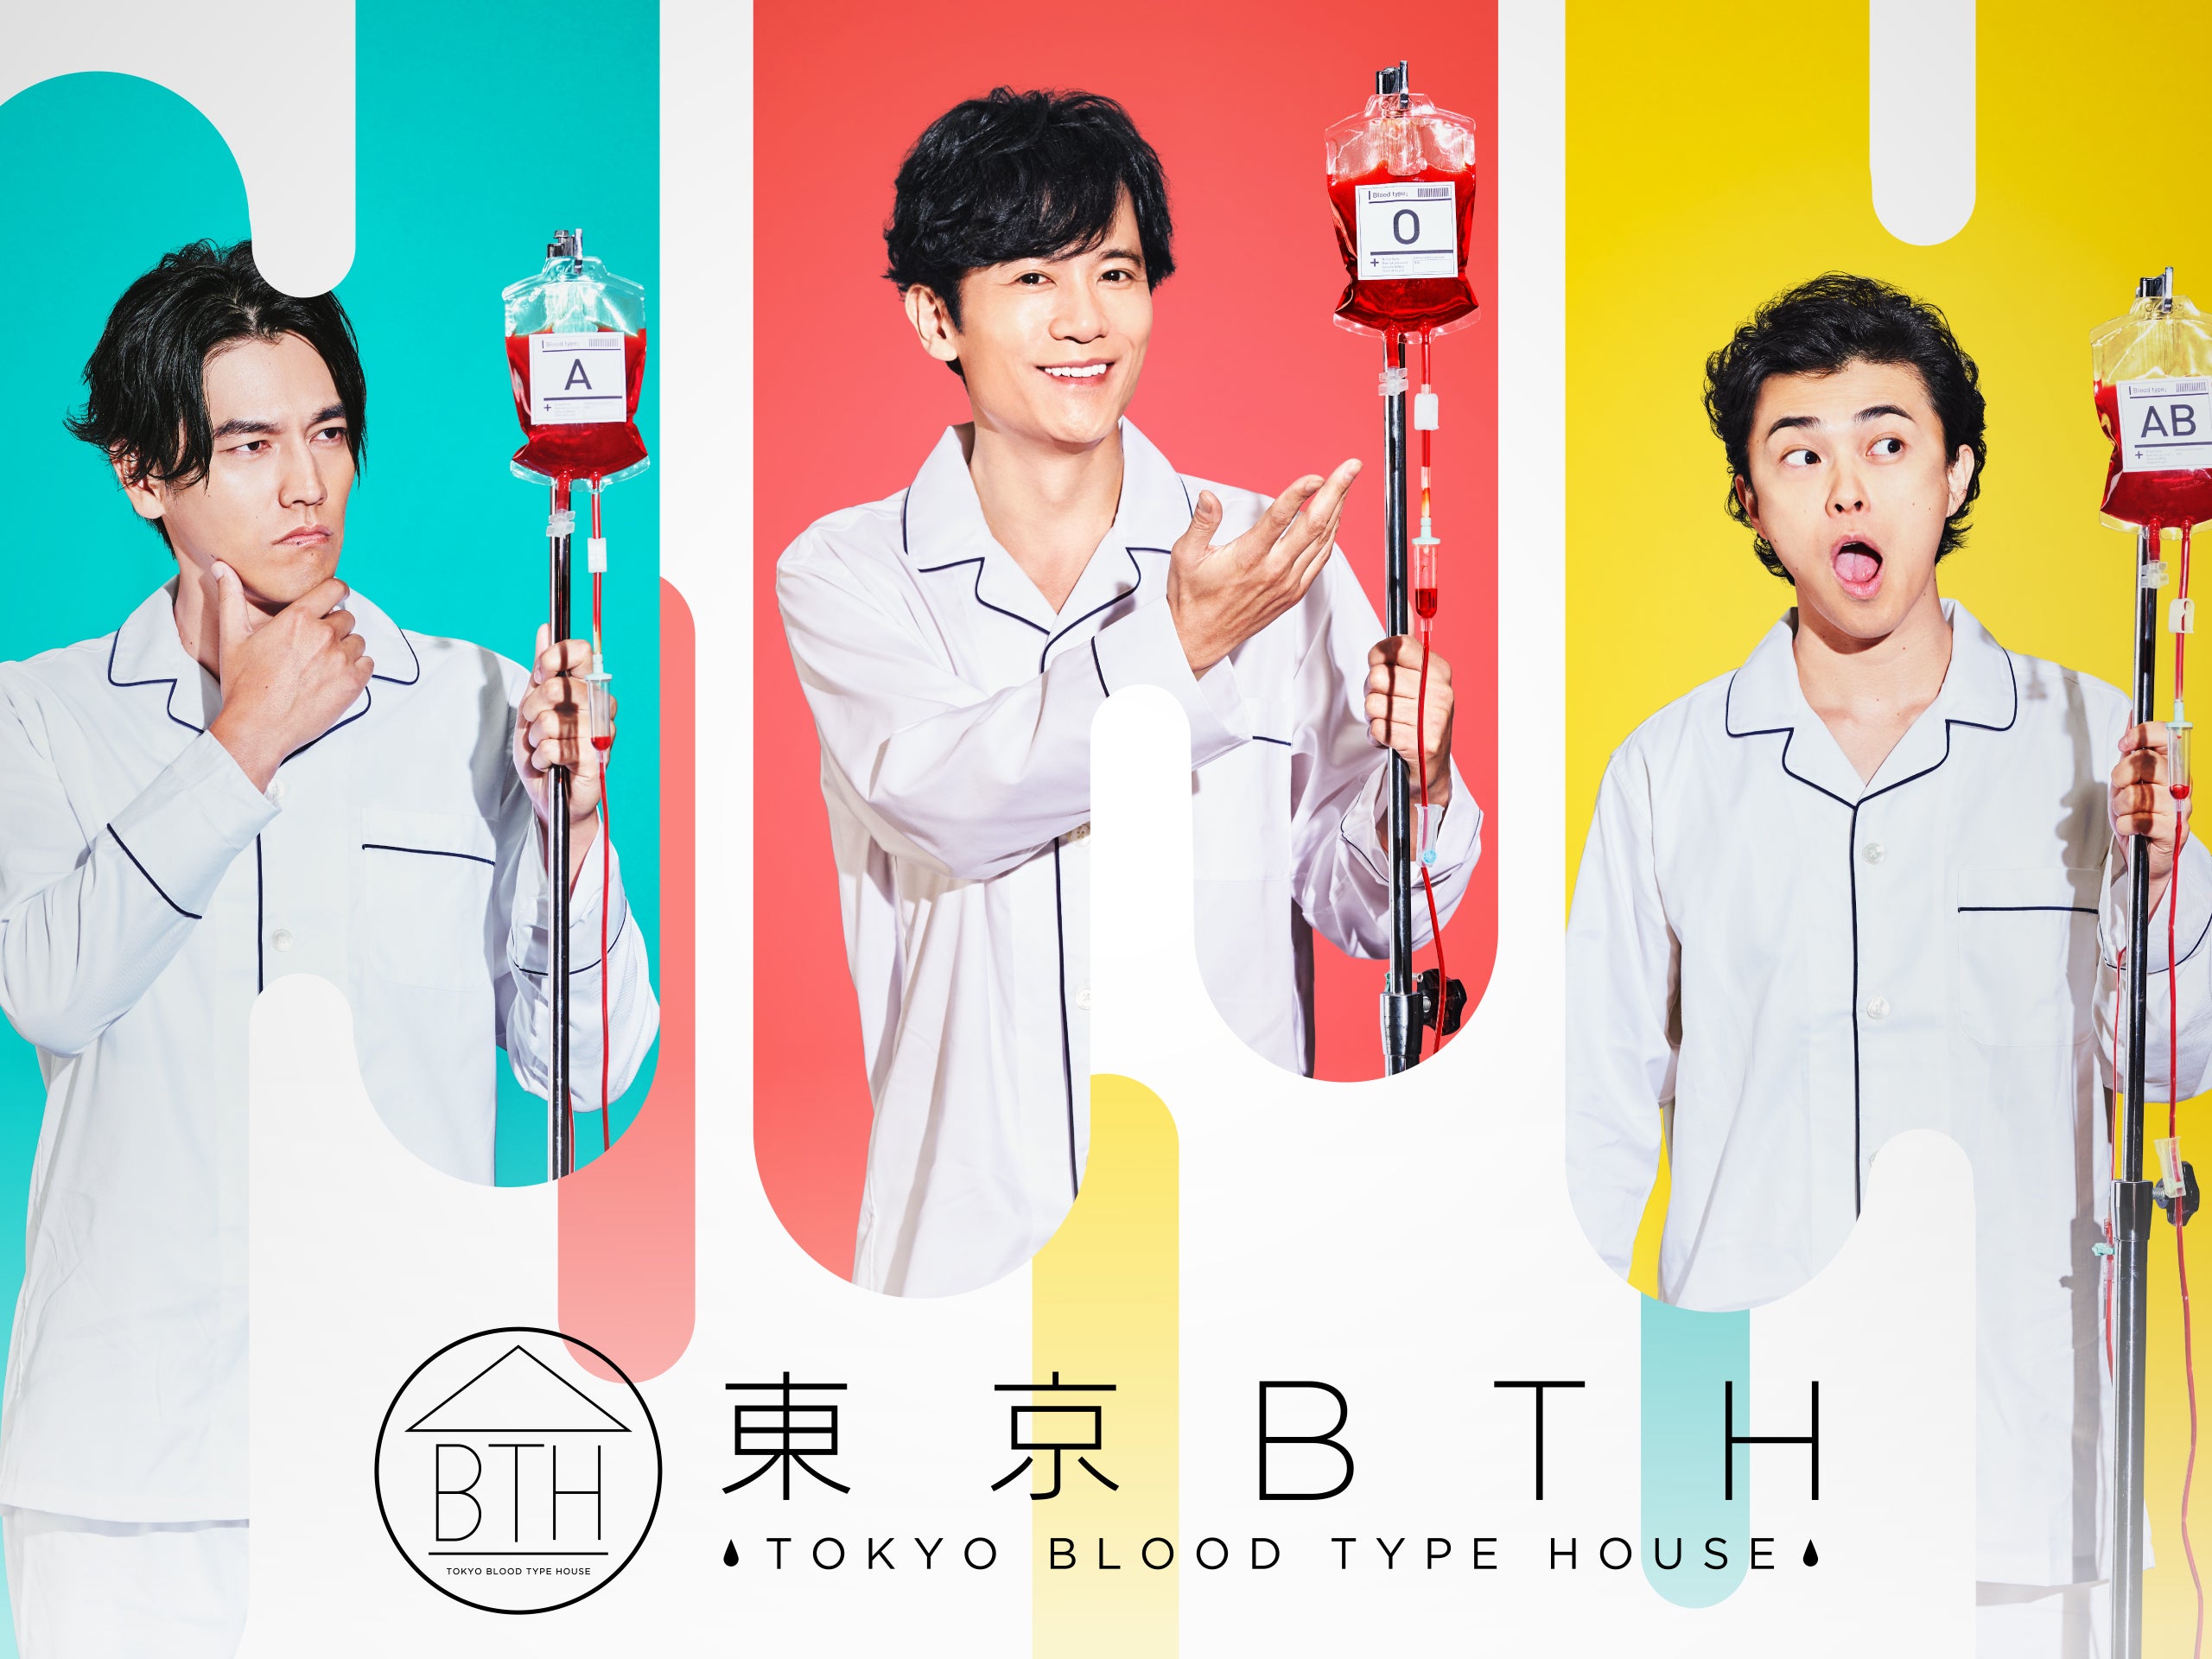 TV ratings for Tokyo Bth: Tokyo Blood Type House (東京BTH〜TOKYO BLOOD TYPE HOUSE〜) in Norway. Amazon Prime Video TV series